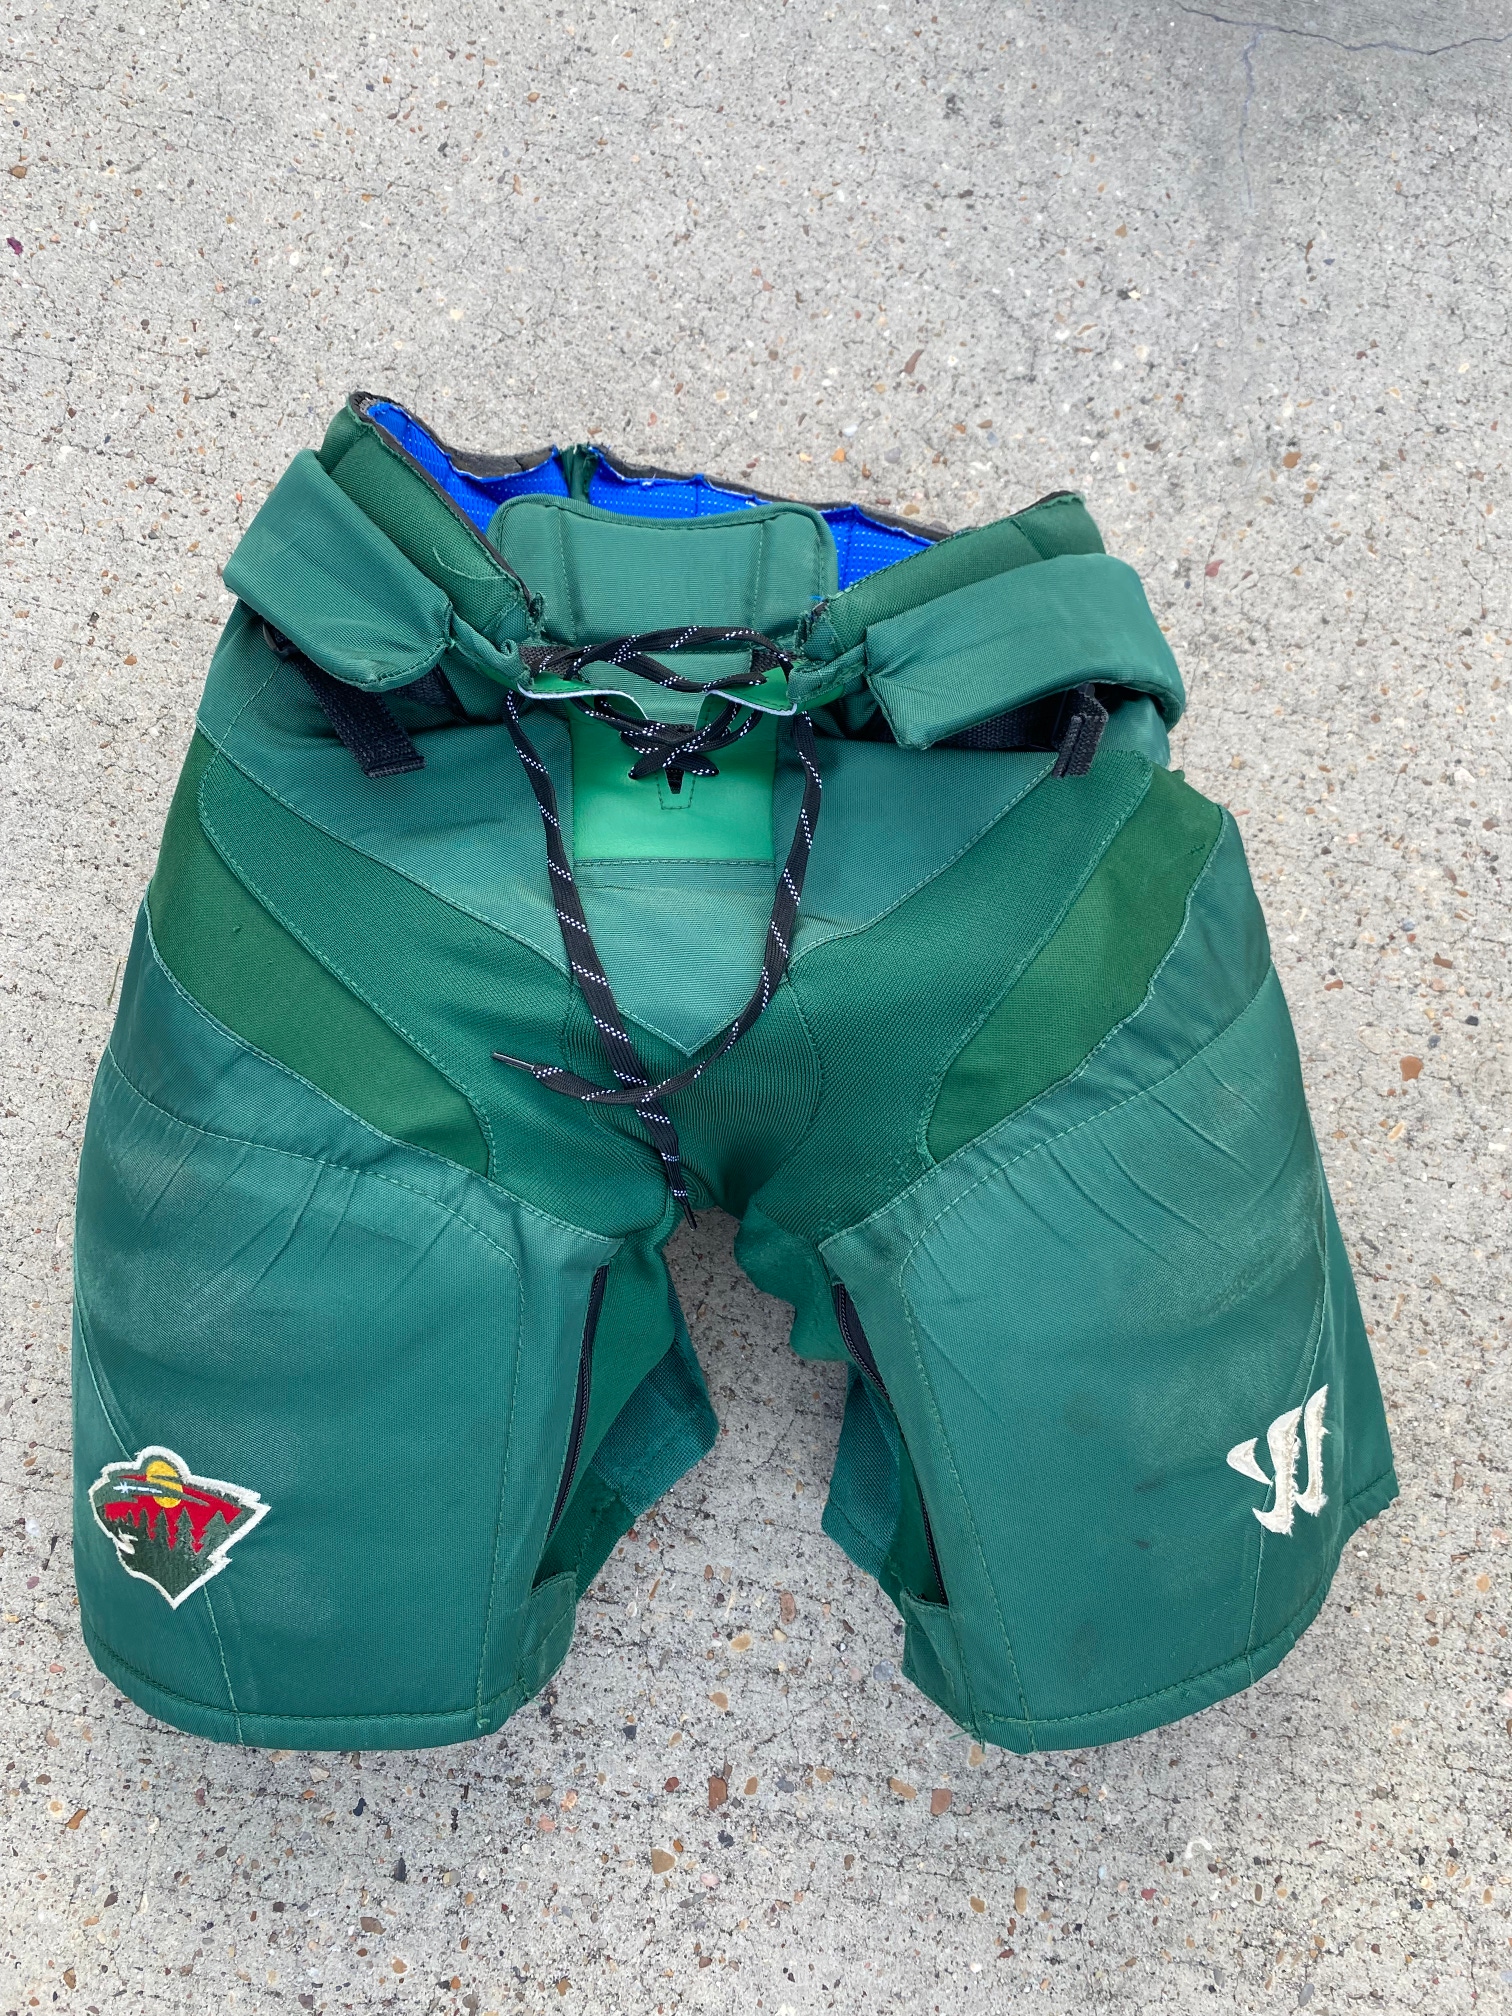 Warrior Covert Pro Stock Hockey Pants Medium Minnesota Wild Green MODIFIED 8685